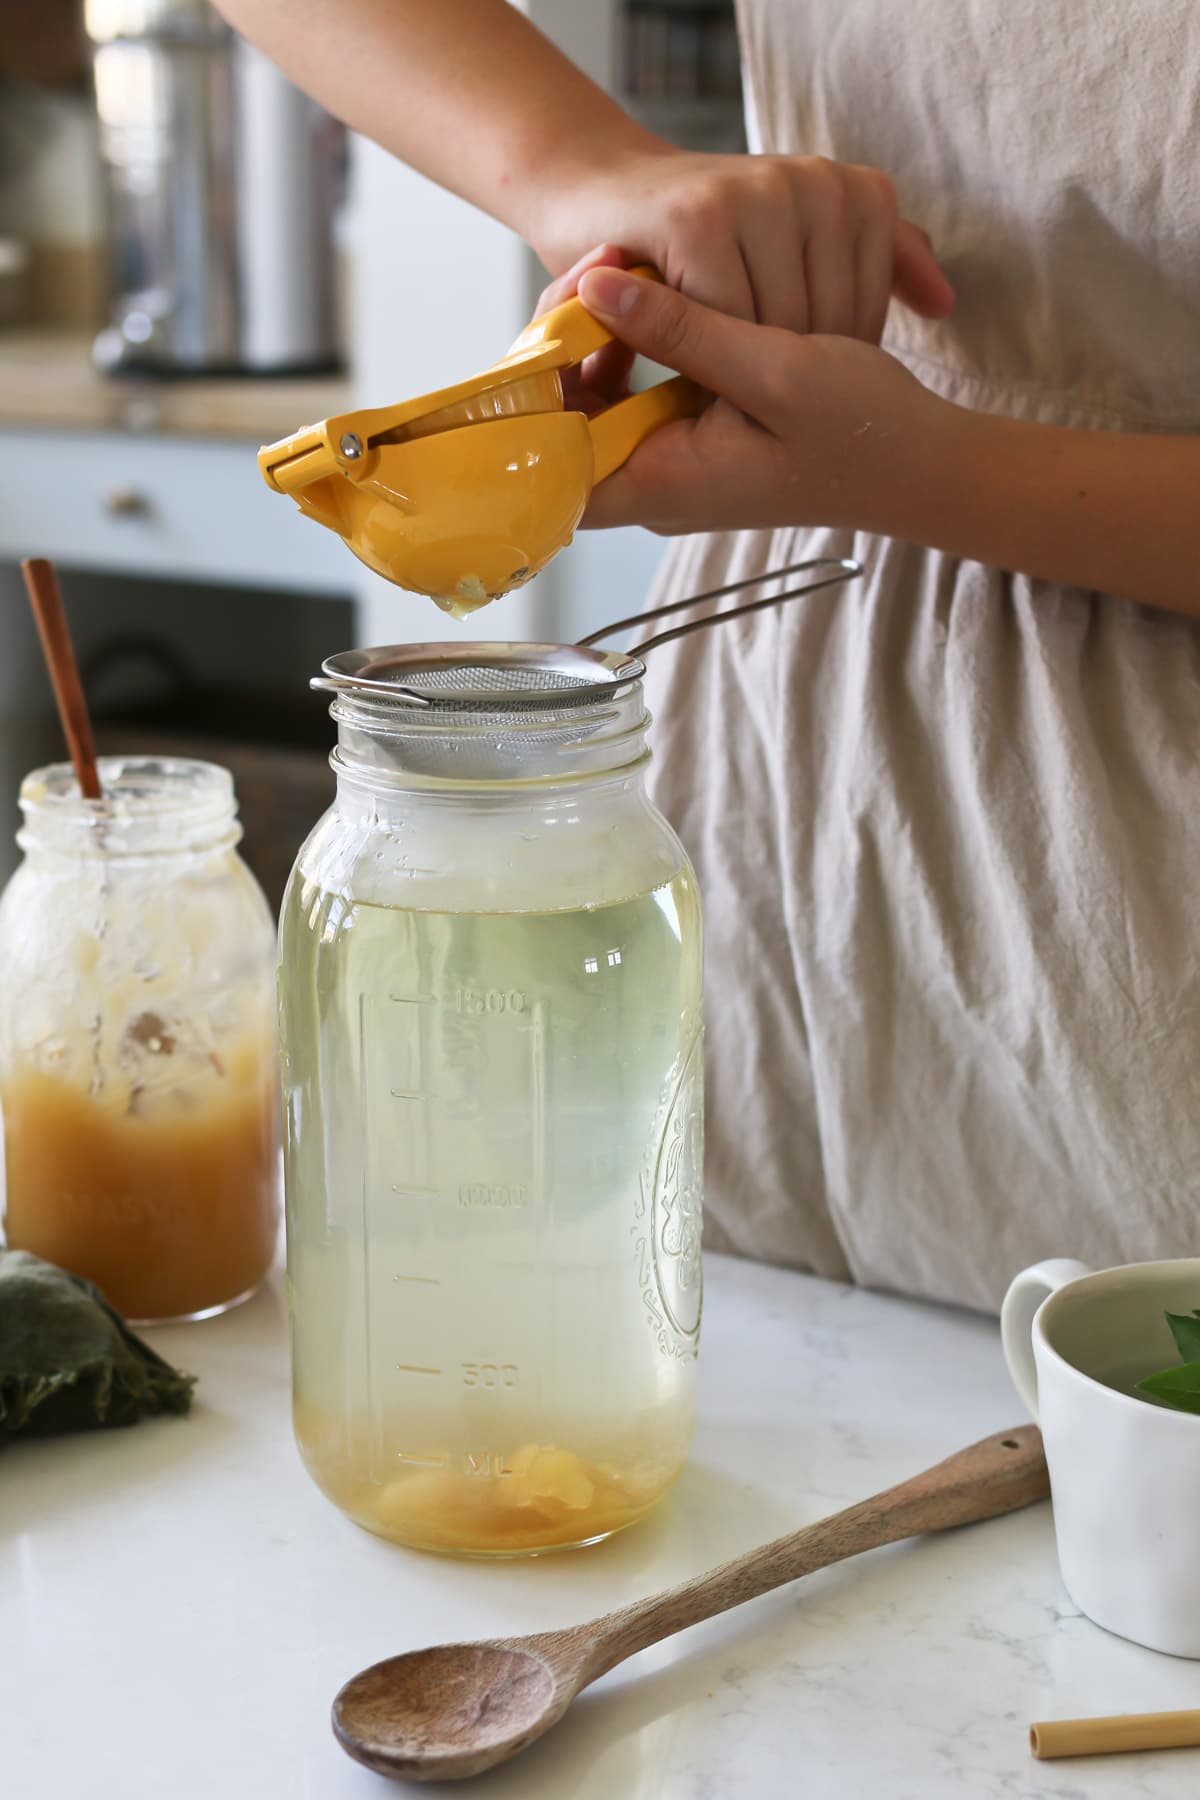 squeezing lemon juice into iced tea